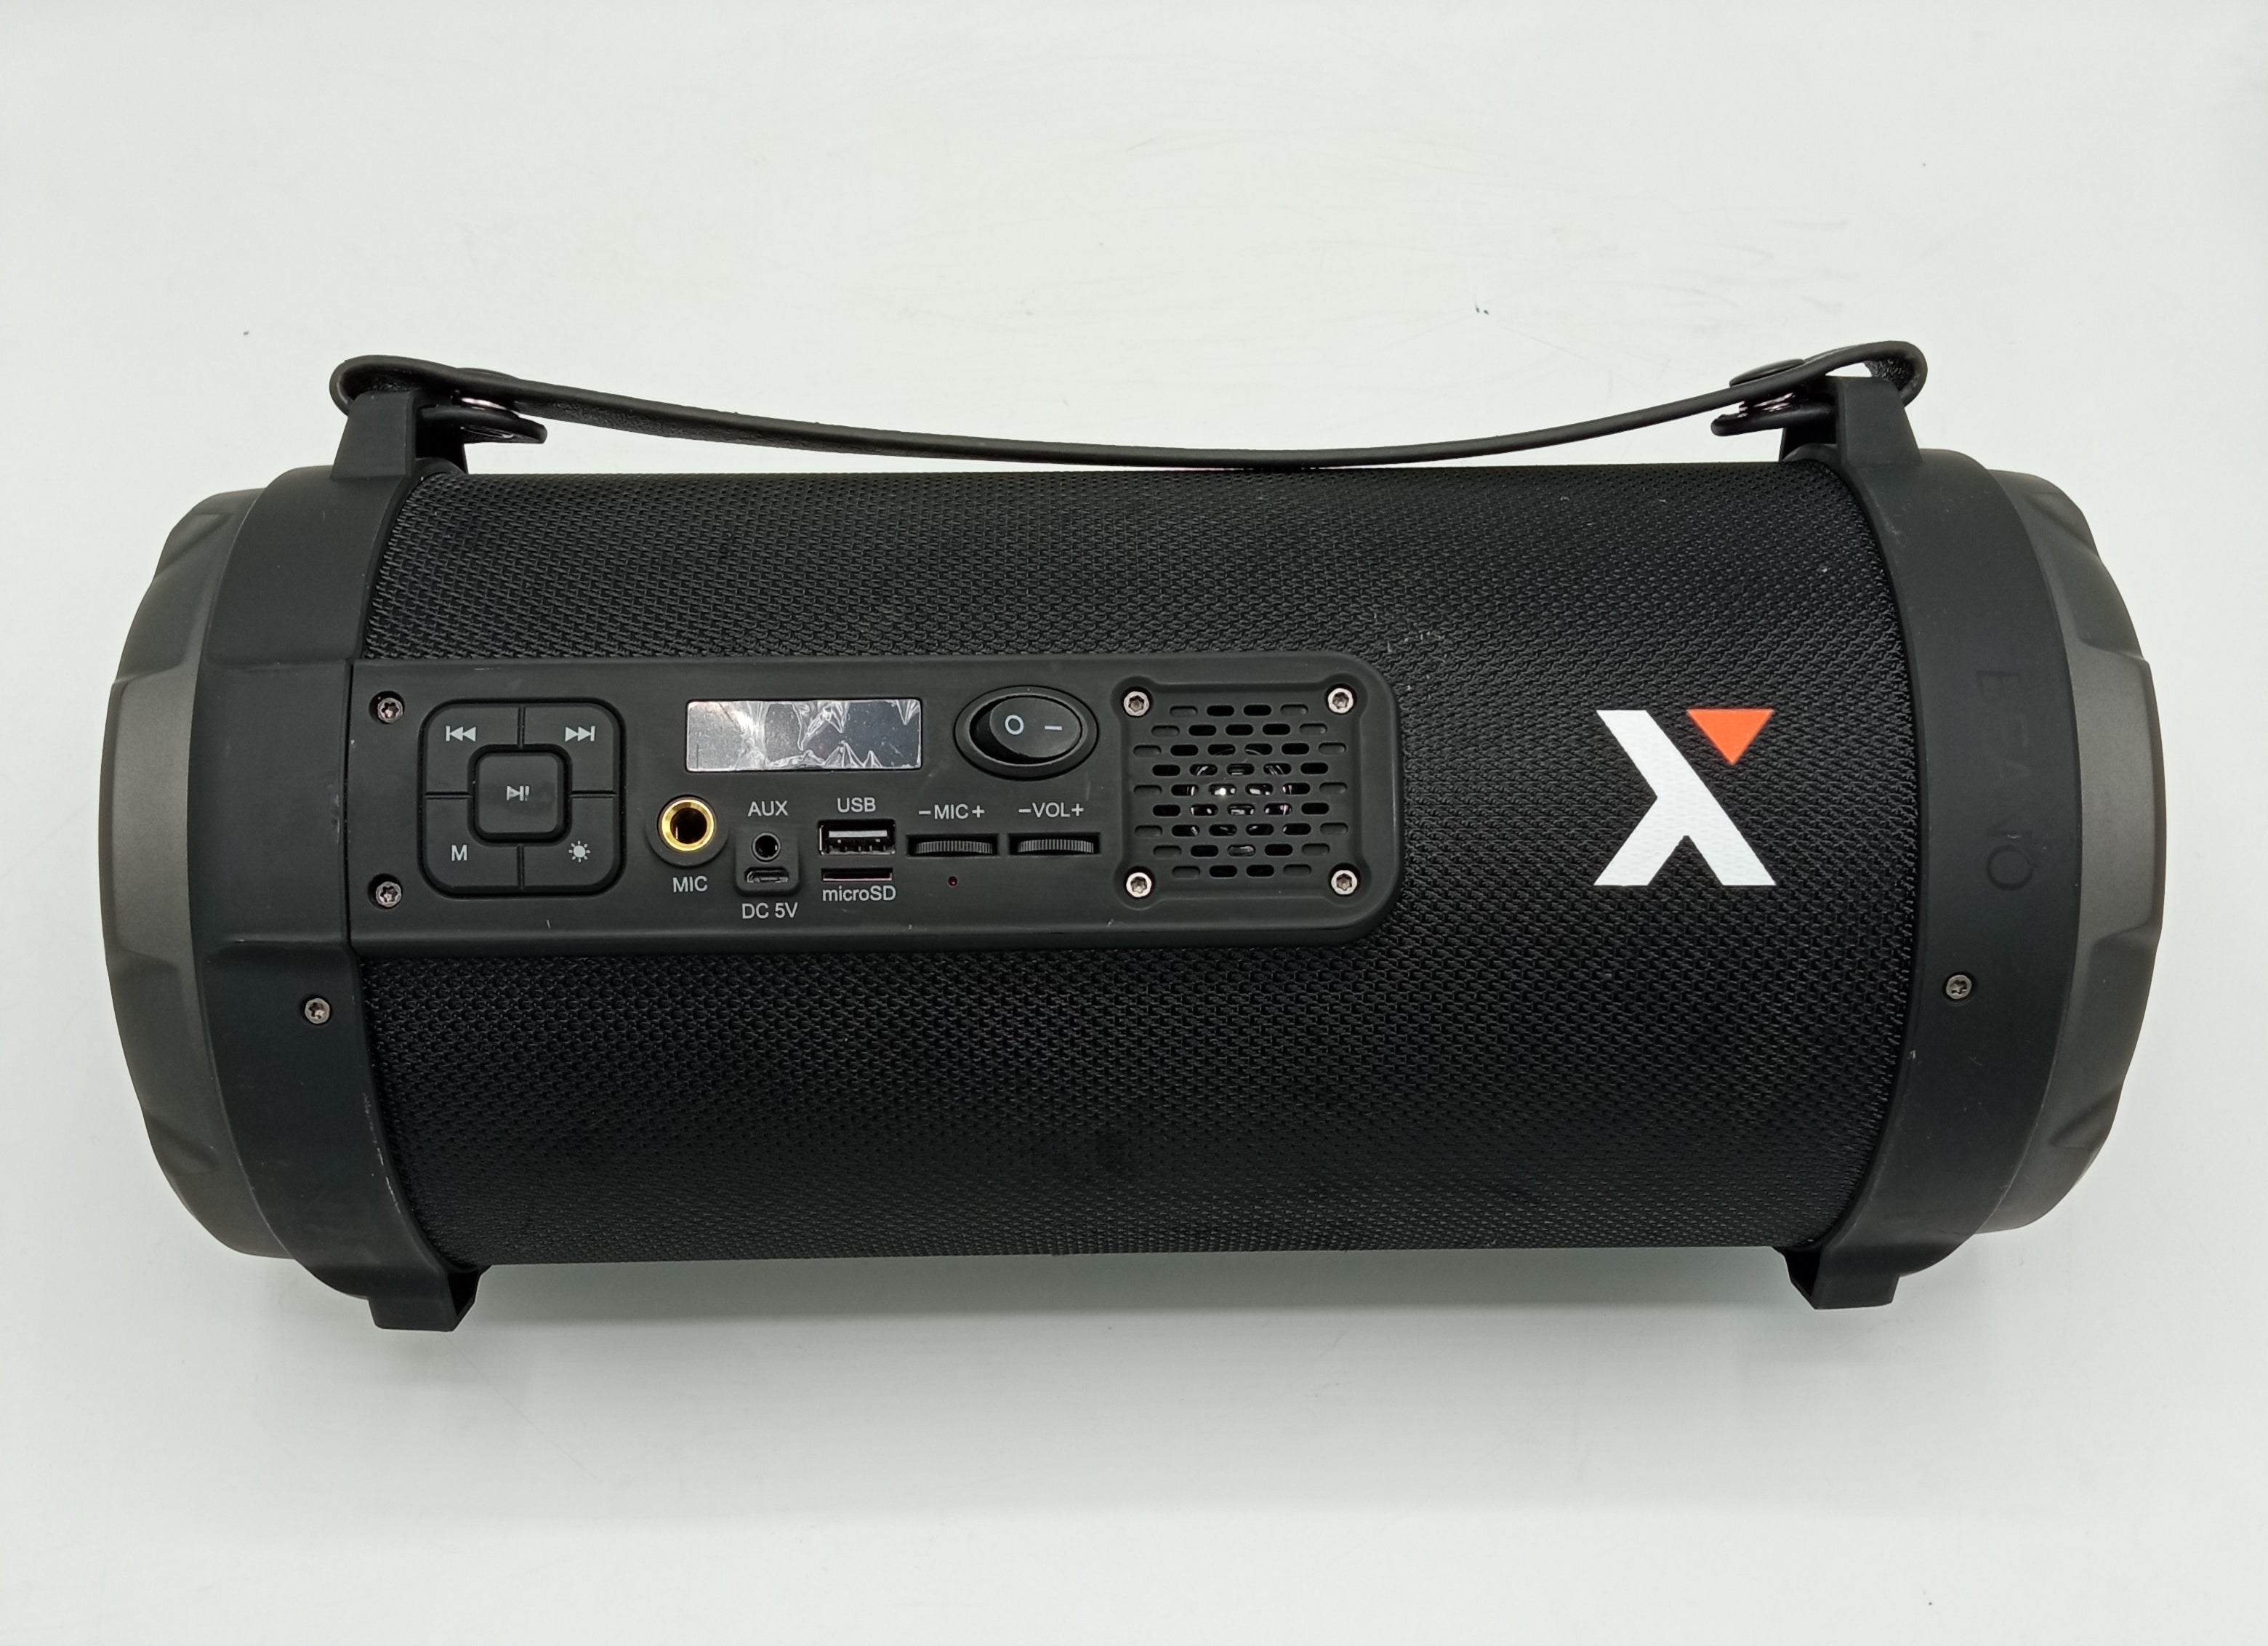 Atalax Beano Bluetooth Speaker